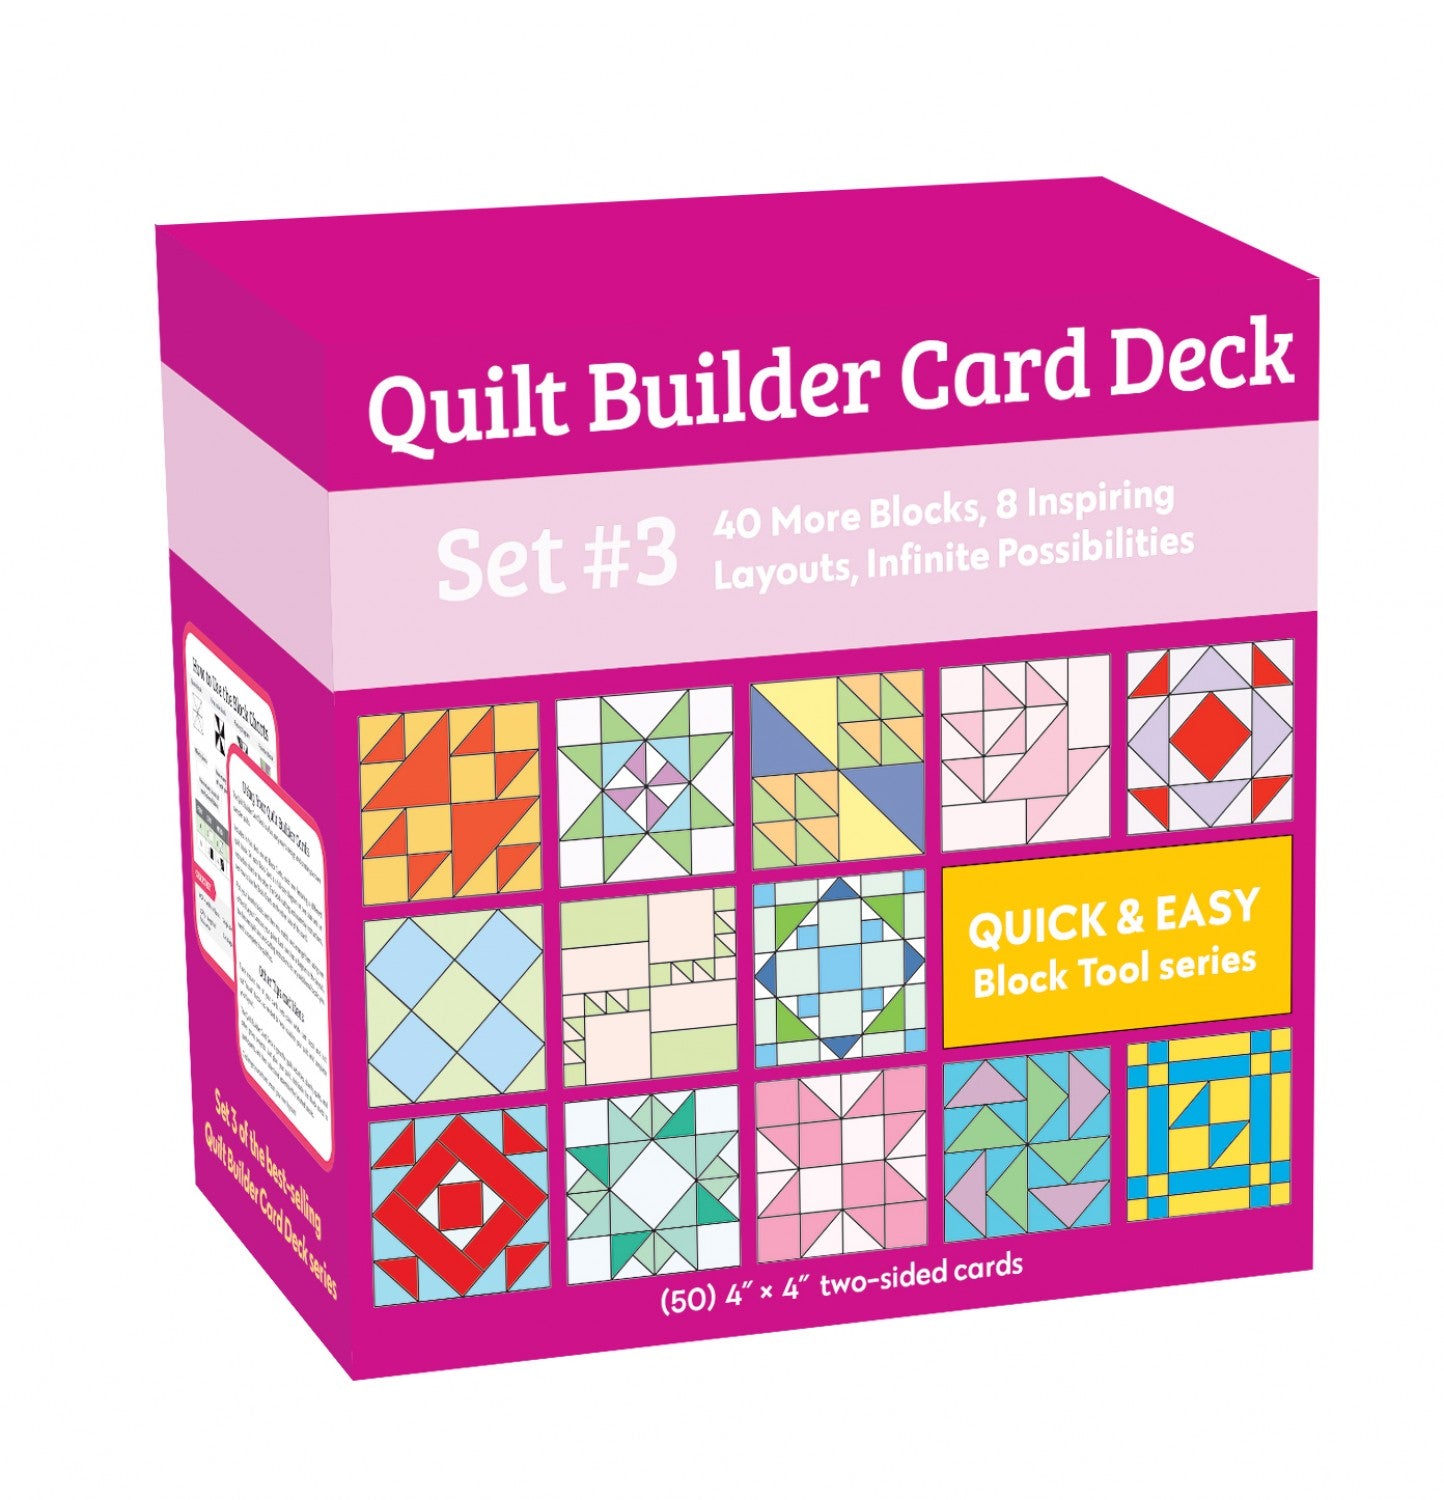 Quilt Builder Card Deck Set #3